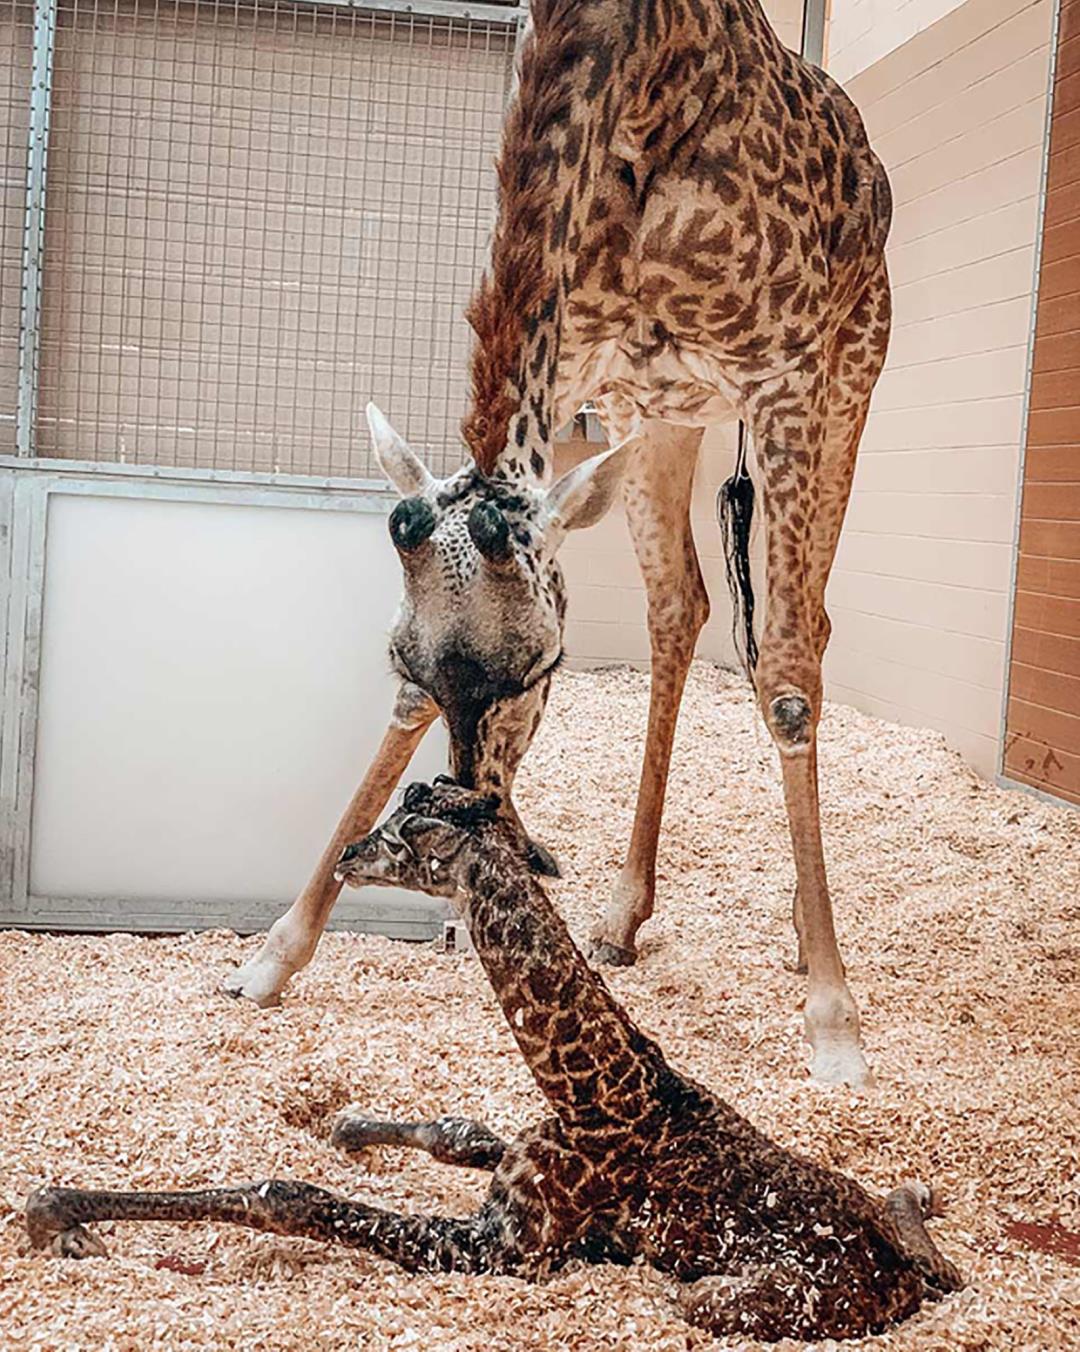 Tragedy follows long-awaited birth at the zoo